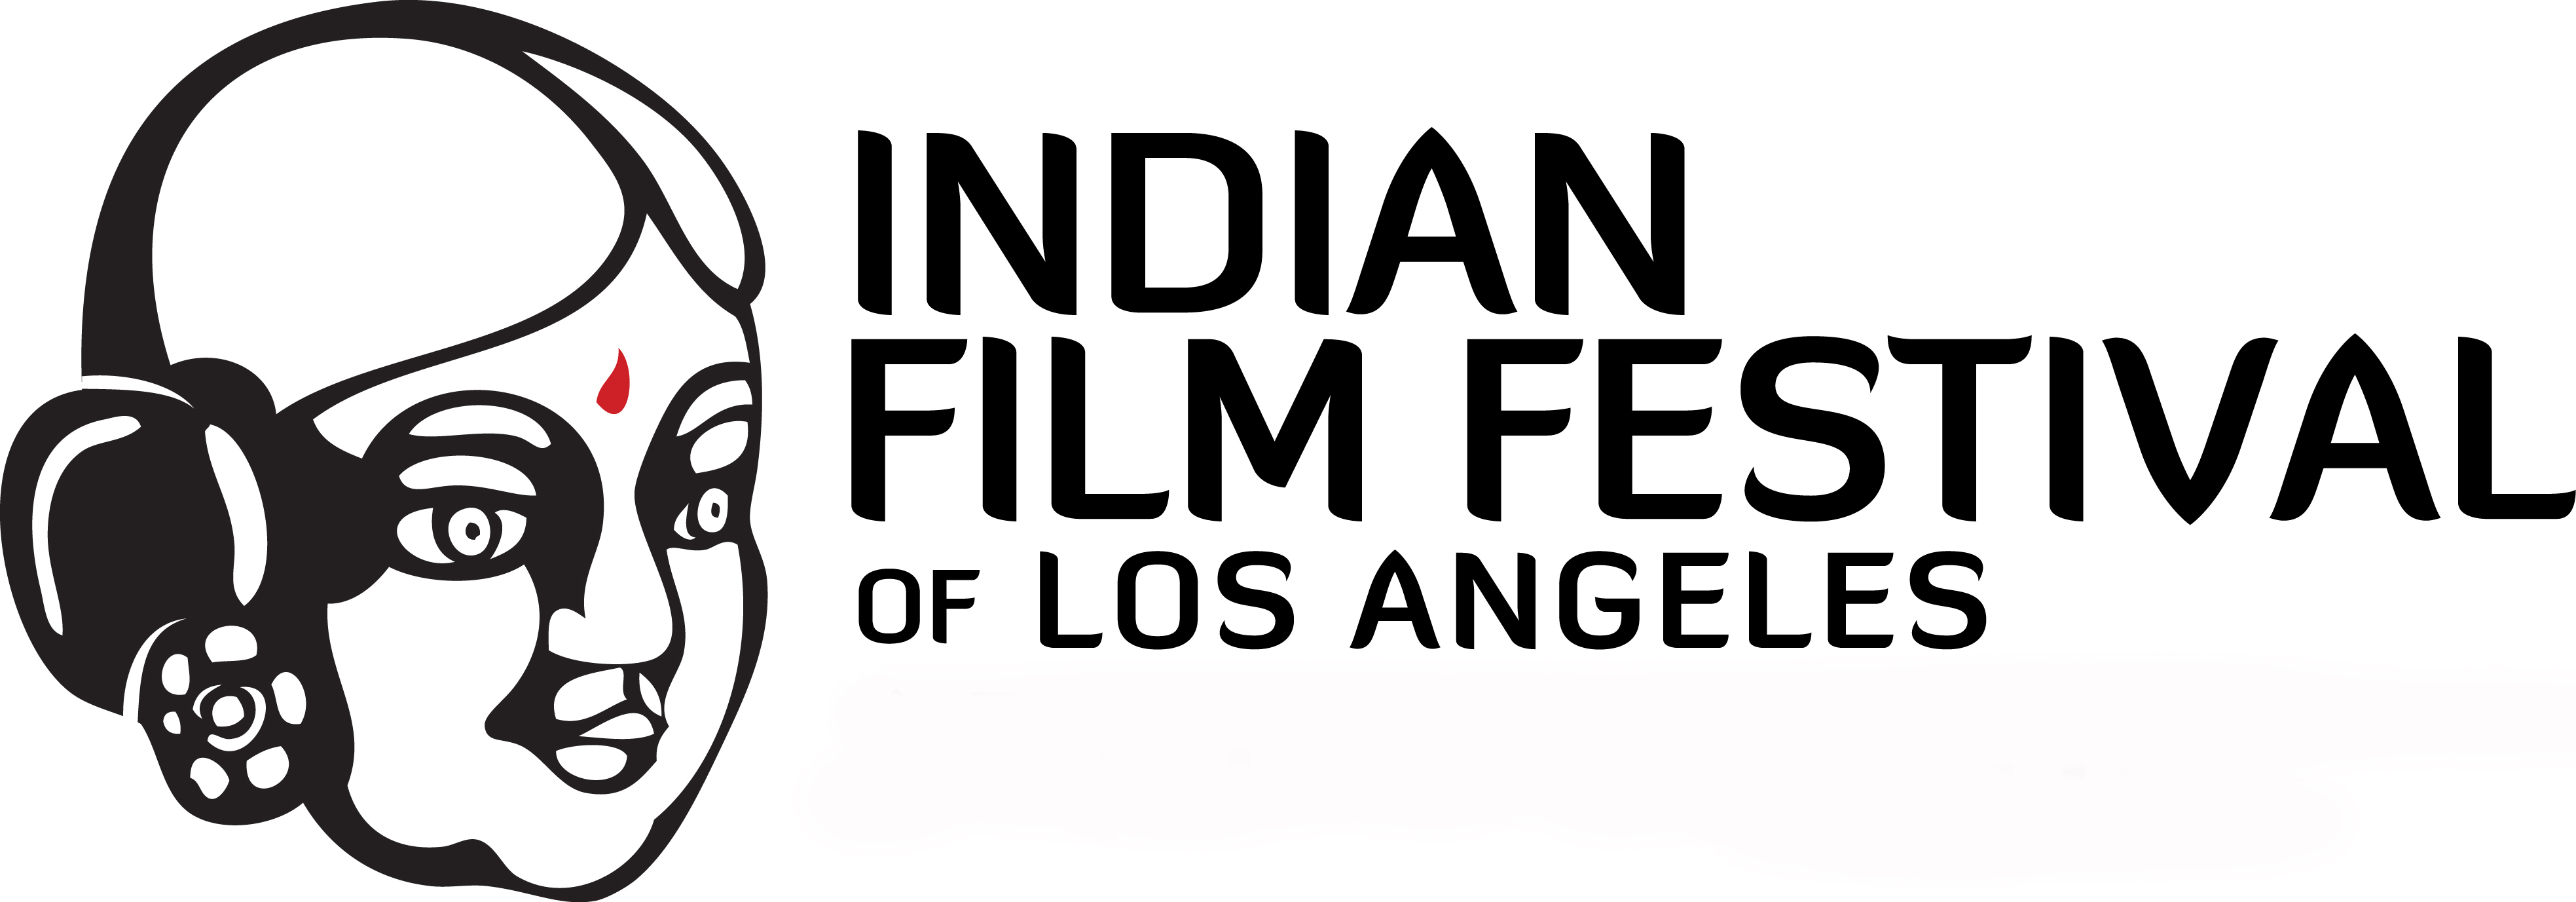 Indian Film Festival in LA